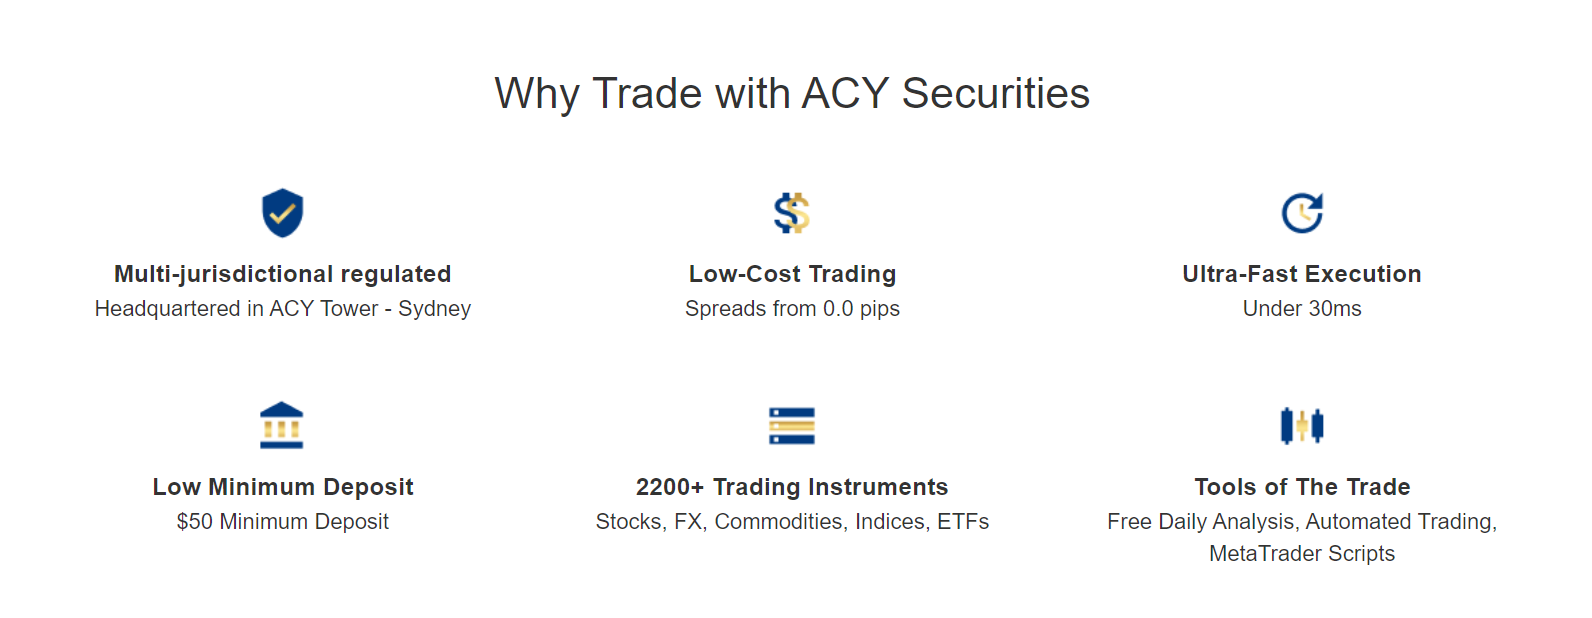 ACY_securities_features